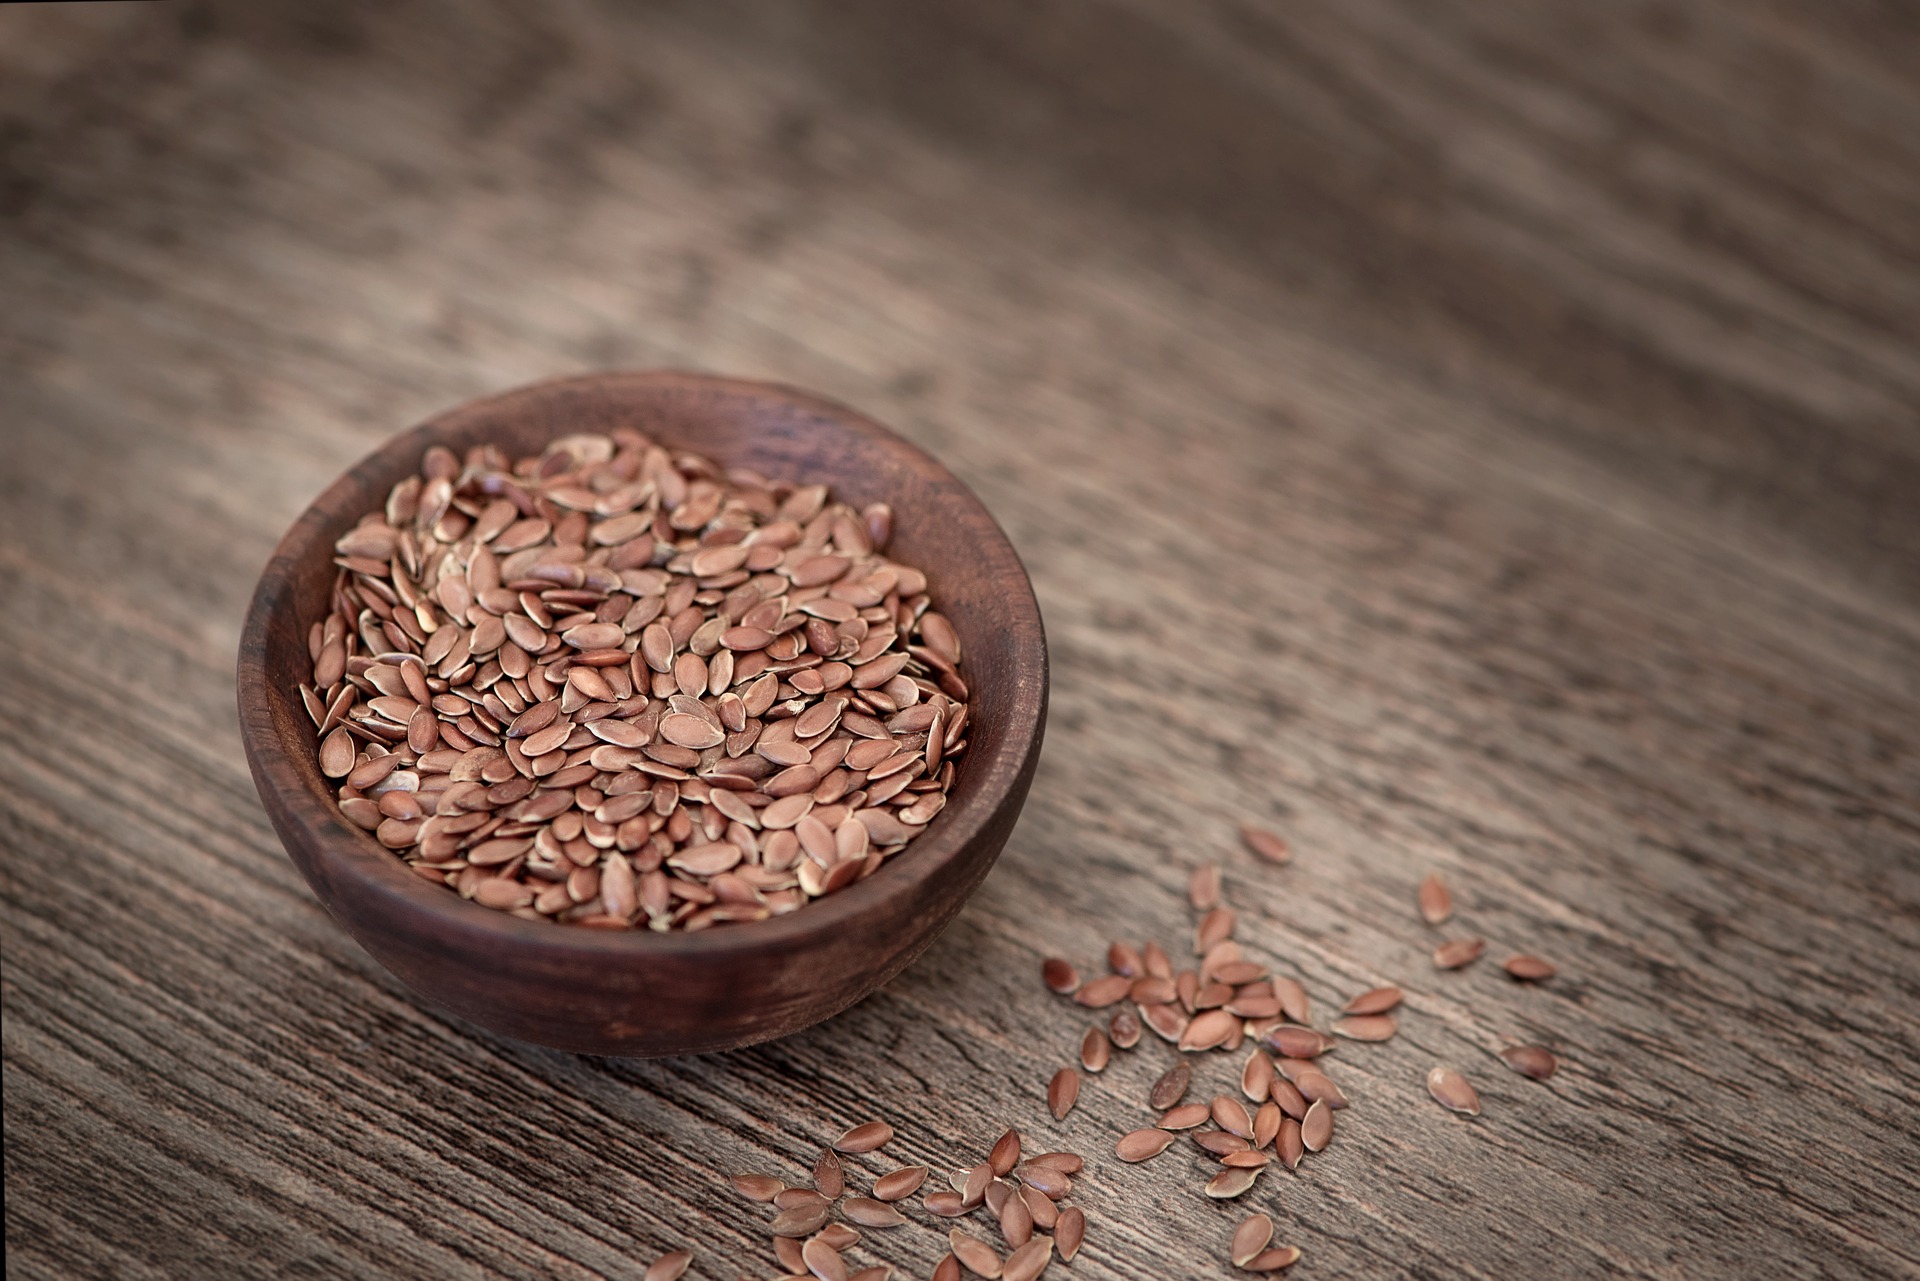 Flax seeds help eczema